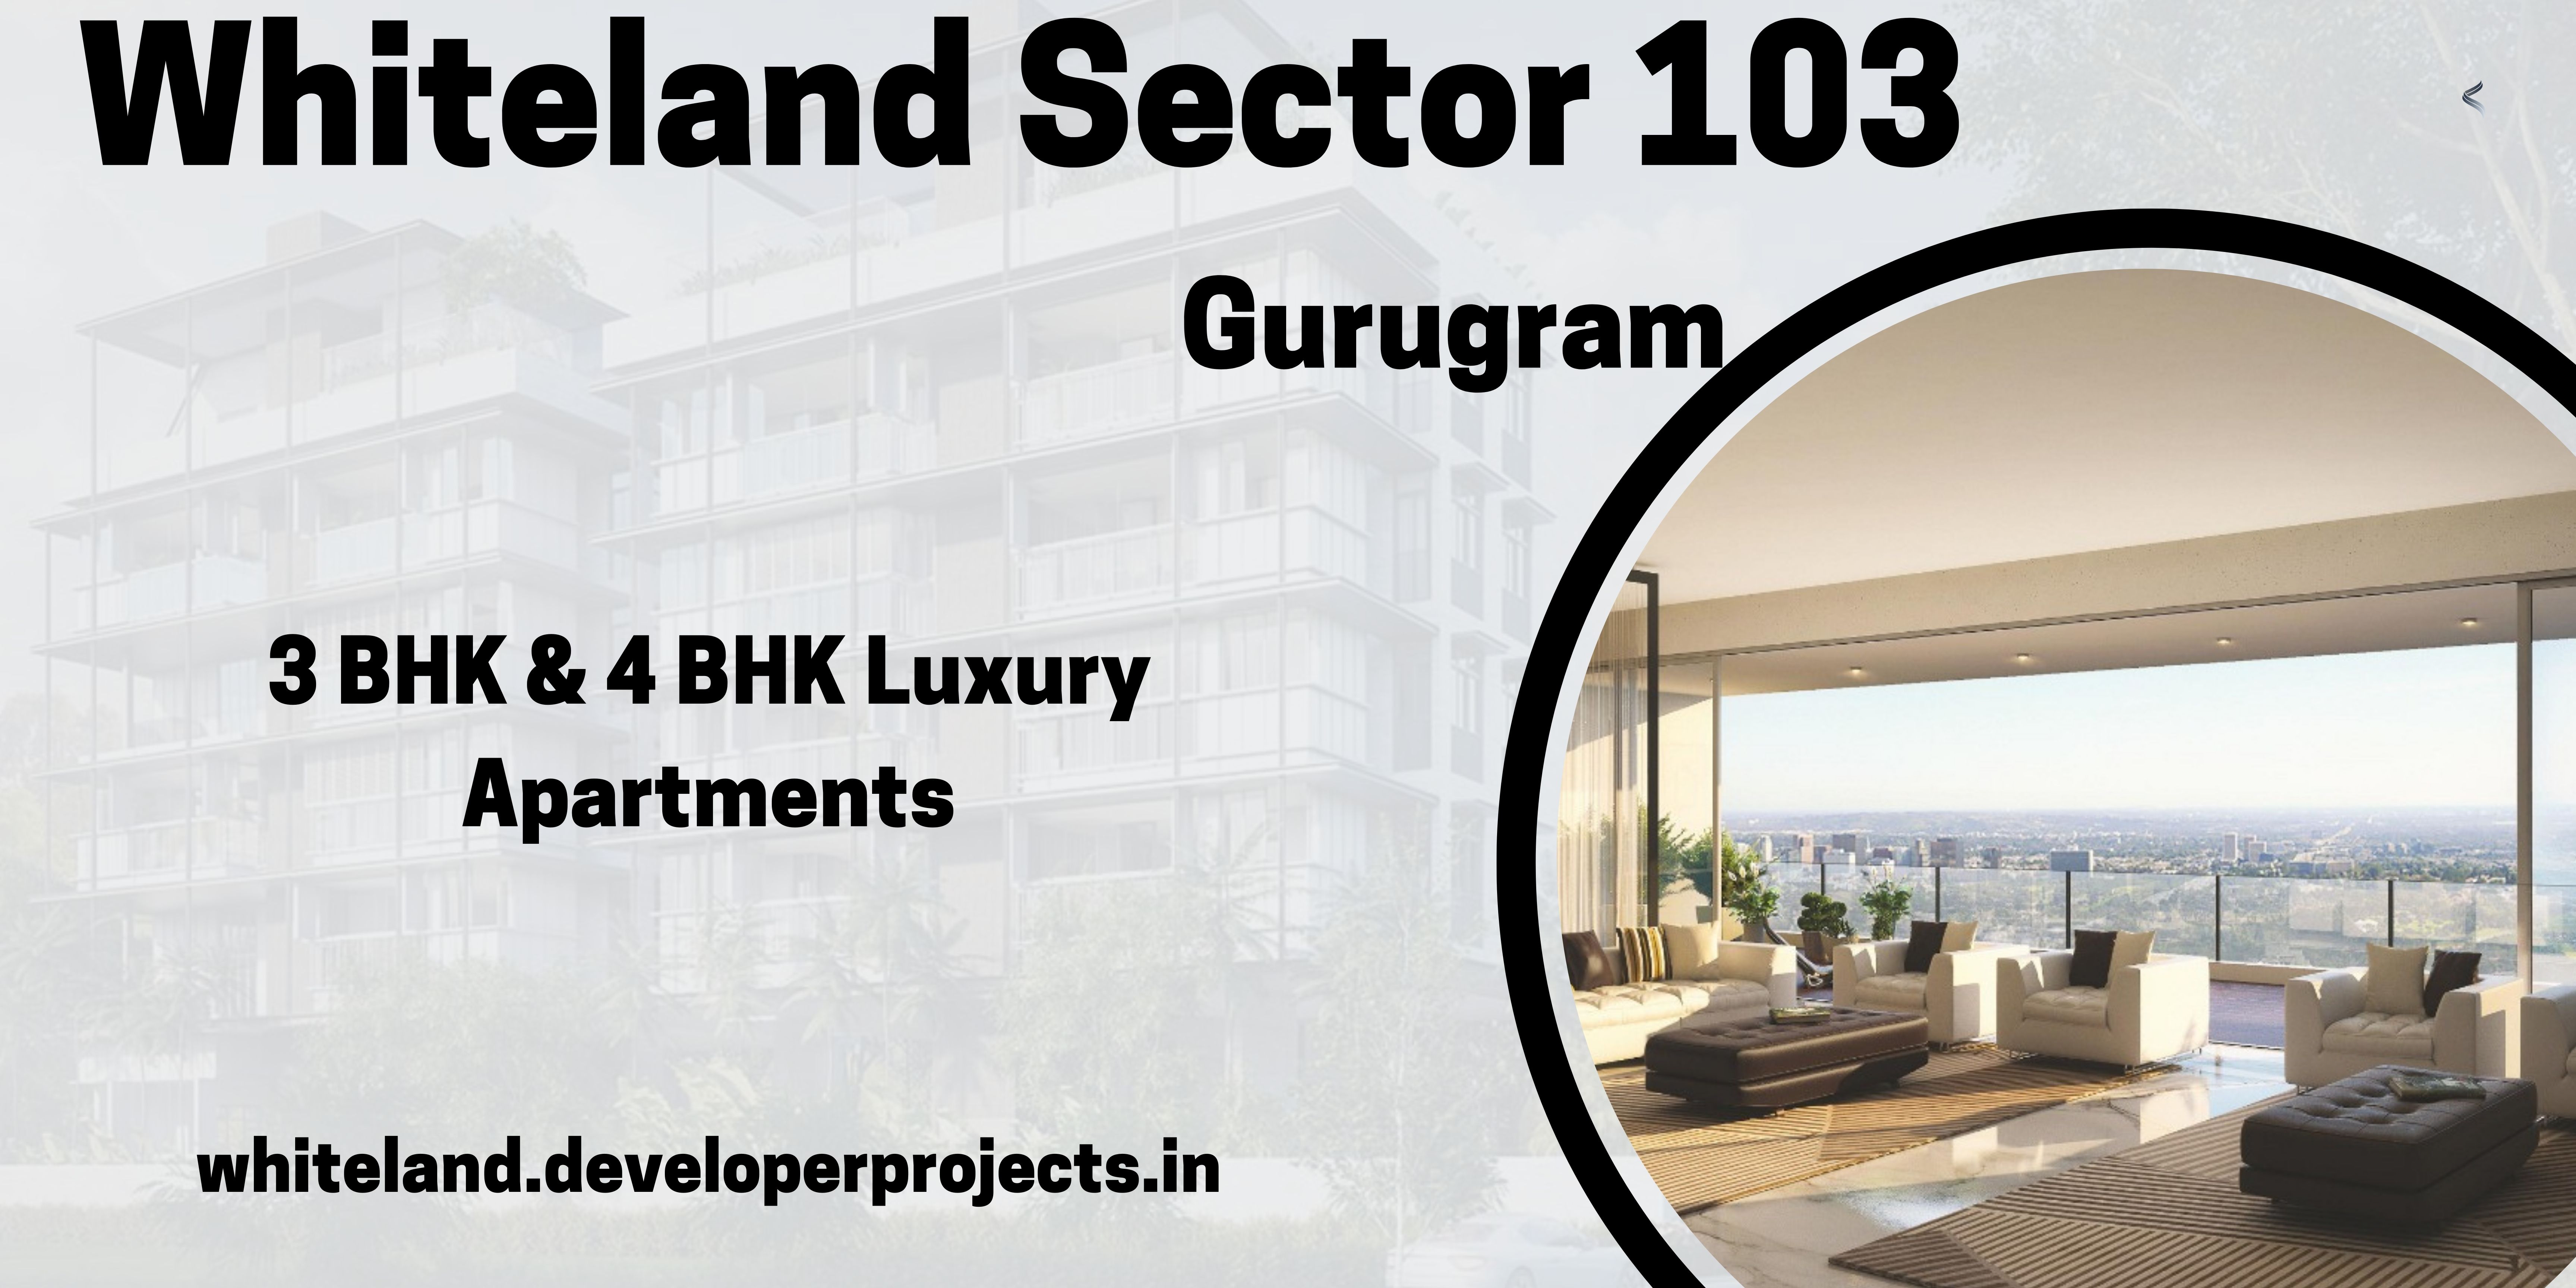 Whiteland Sector 103 Gurugram - A Venue For World-Class Indulgences